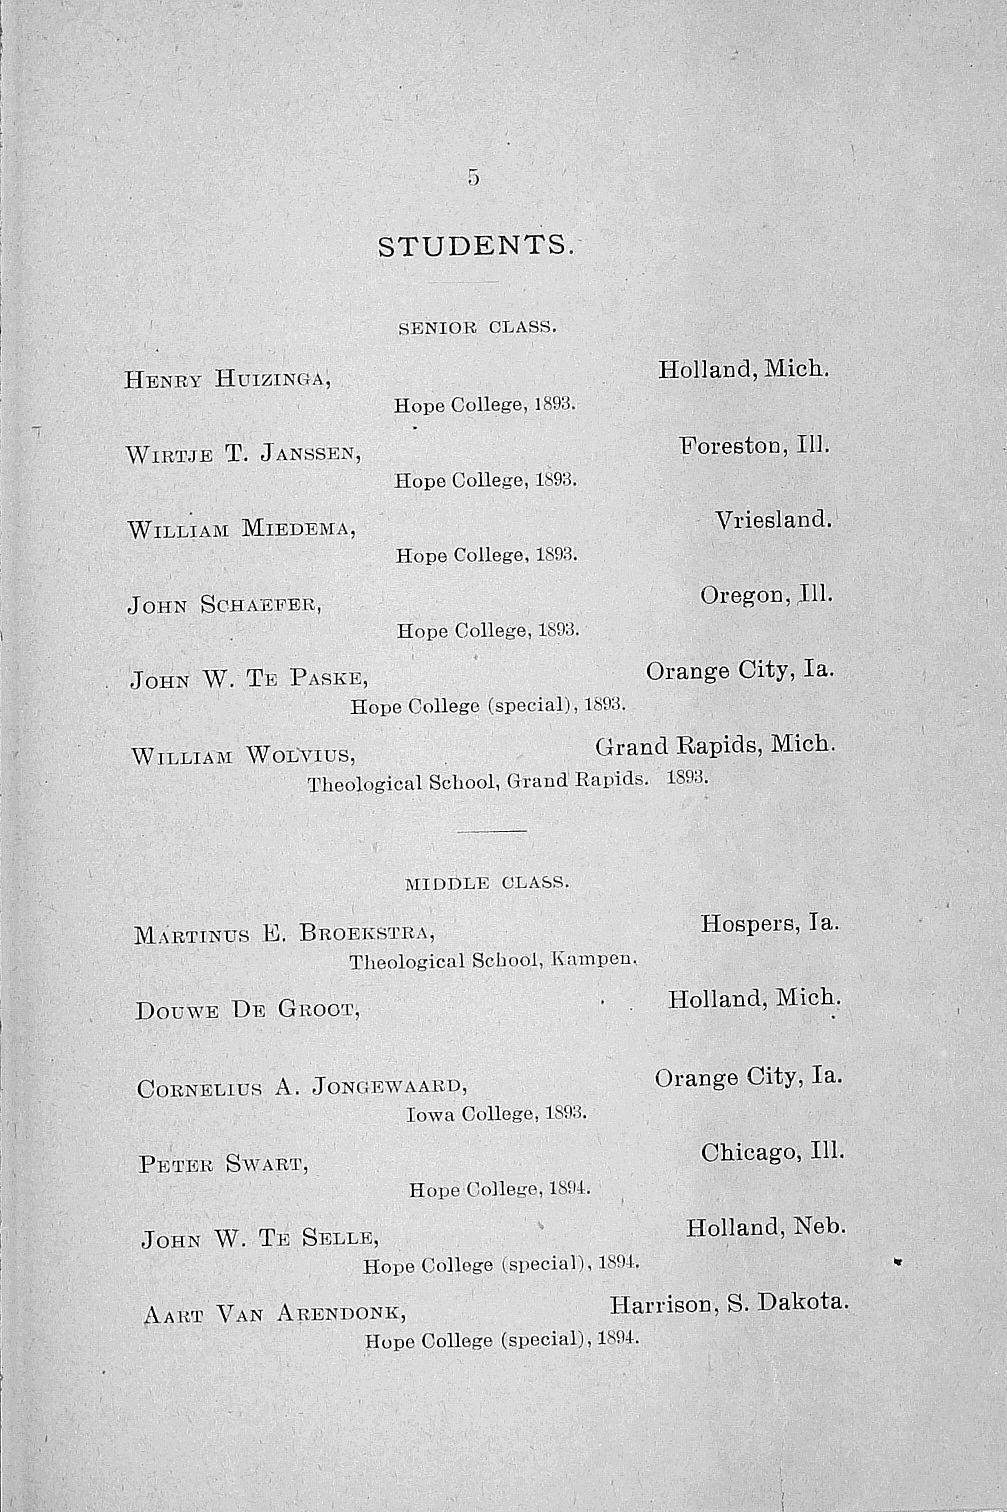 STUDENTS. Henry Huizinga, Wirtje T. Janssen, William Miedema, John Schaefer, SENIOR CLASS. Hope College, 1893. Hope College, 1893. Hope College, 1893. Hope College, 1893. Holland, Mich. Foreston, 111.